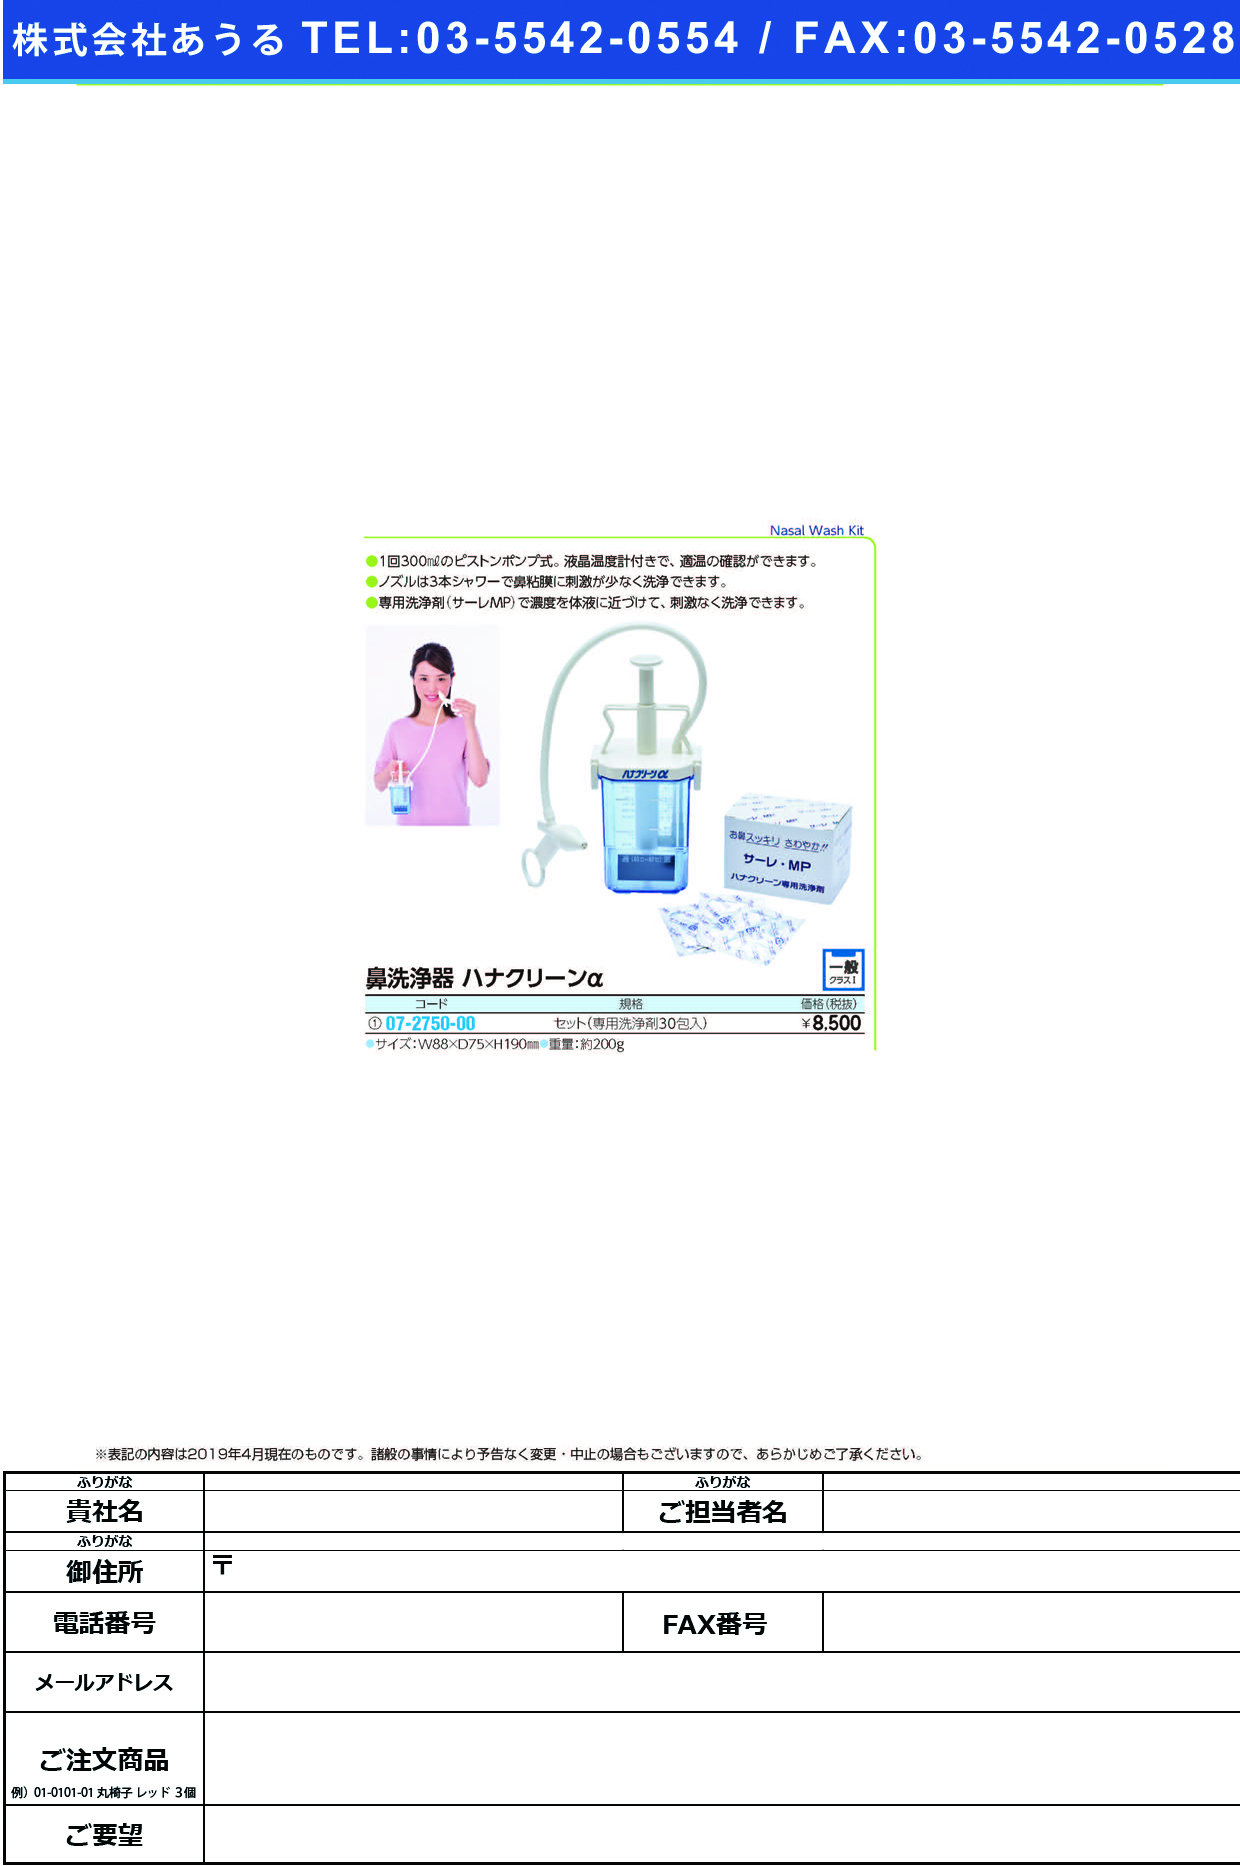 (07-2750-00)ハナクリーンα（鼻洗浄器） ﾎﾝﾀｲ+ｻｰﾚMP30ﾎﾟｳﾂｷ ﾊﾅｸﾘｰﾝA(ﾊﾅｾﾝｼﾞｮｳｷ)【1台単位】【2019年カタログ商品】